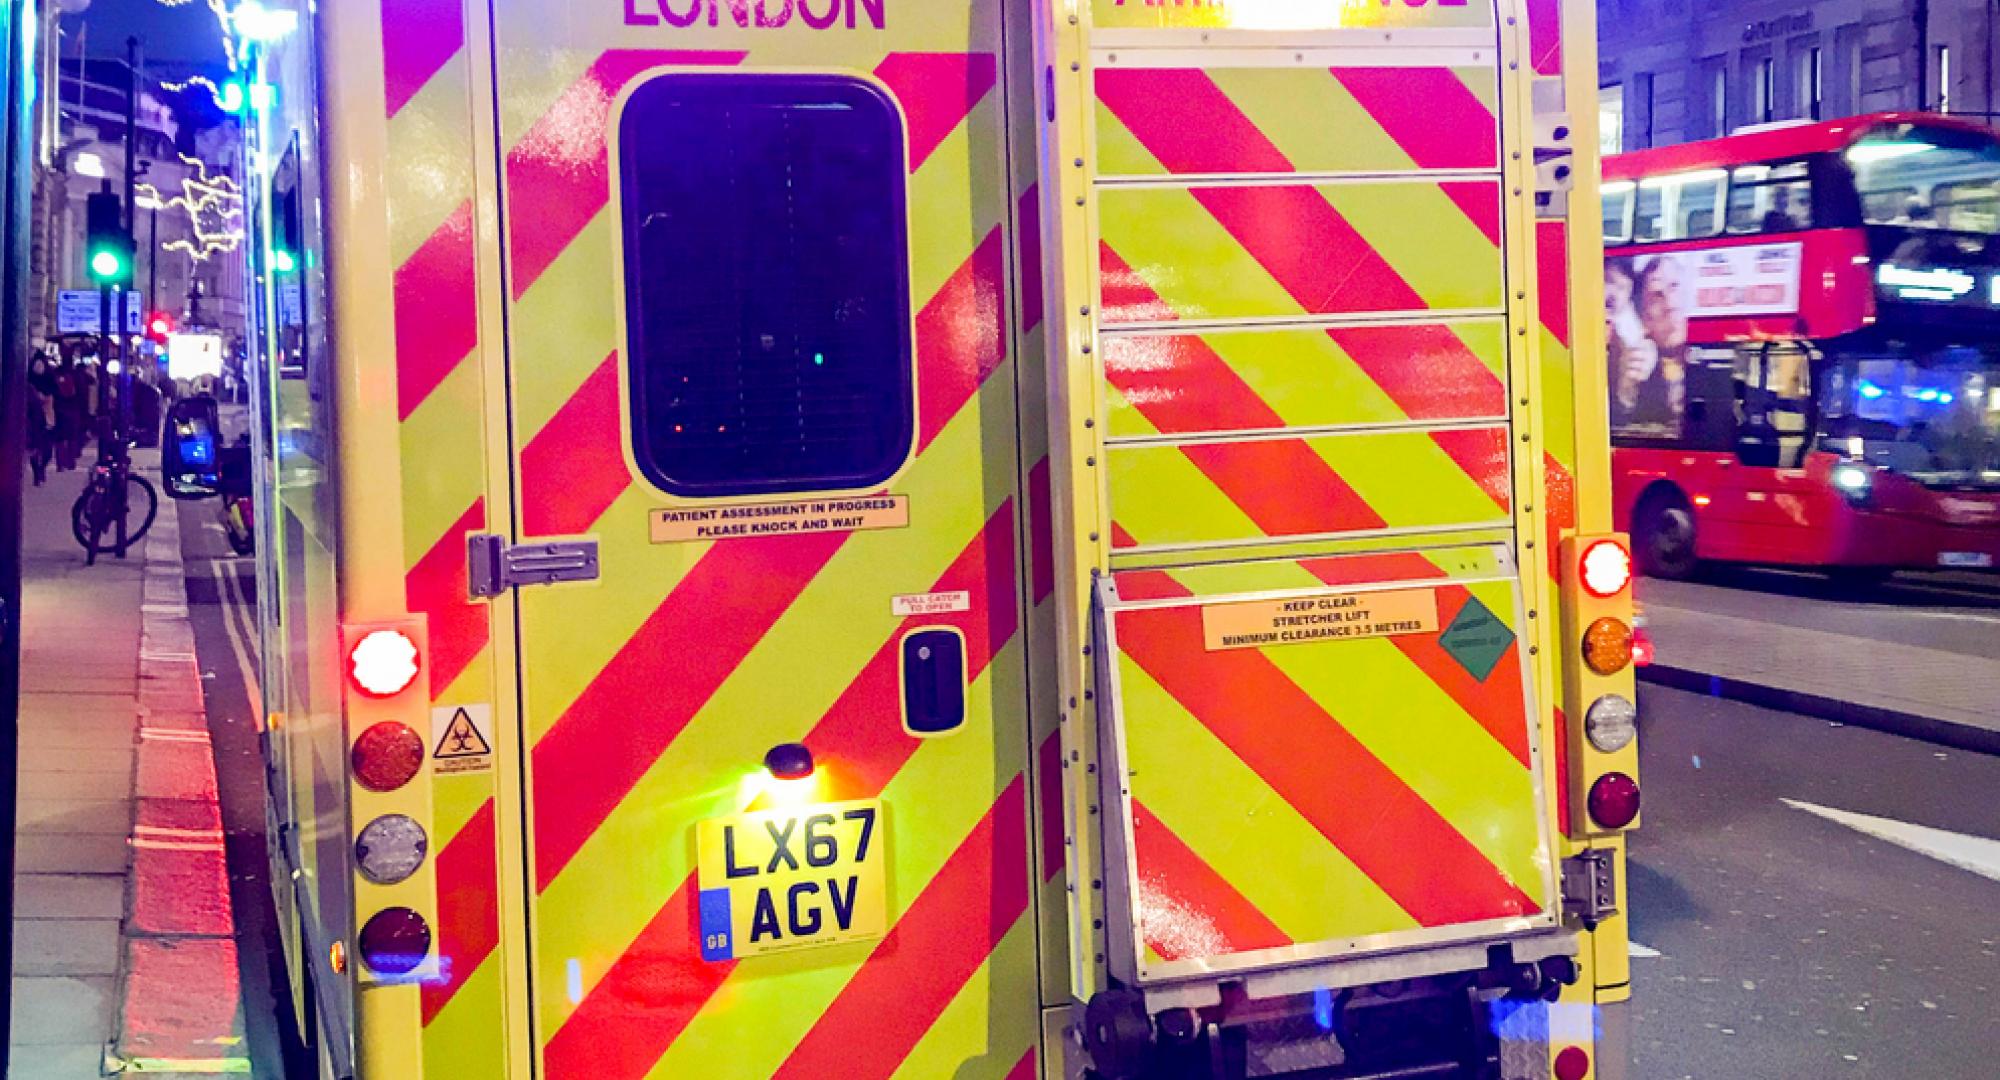 Ambulance with lights on